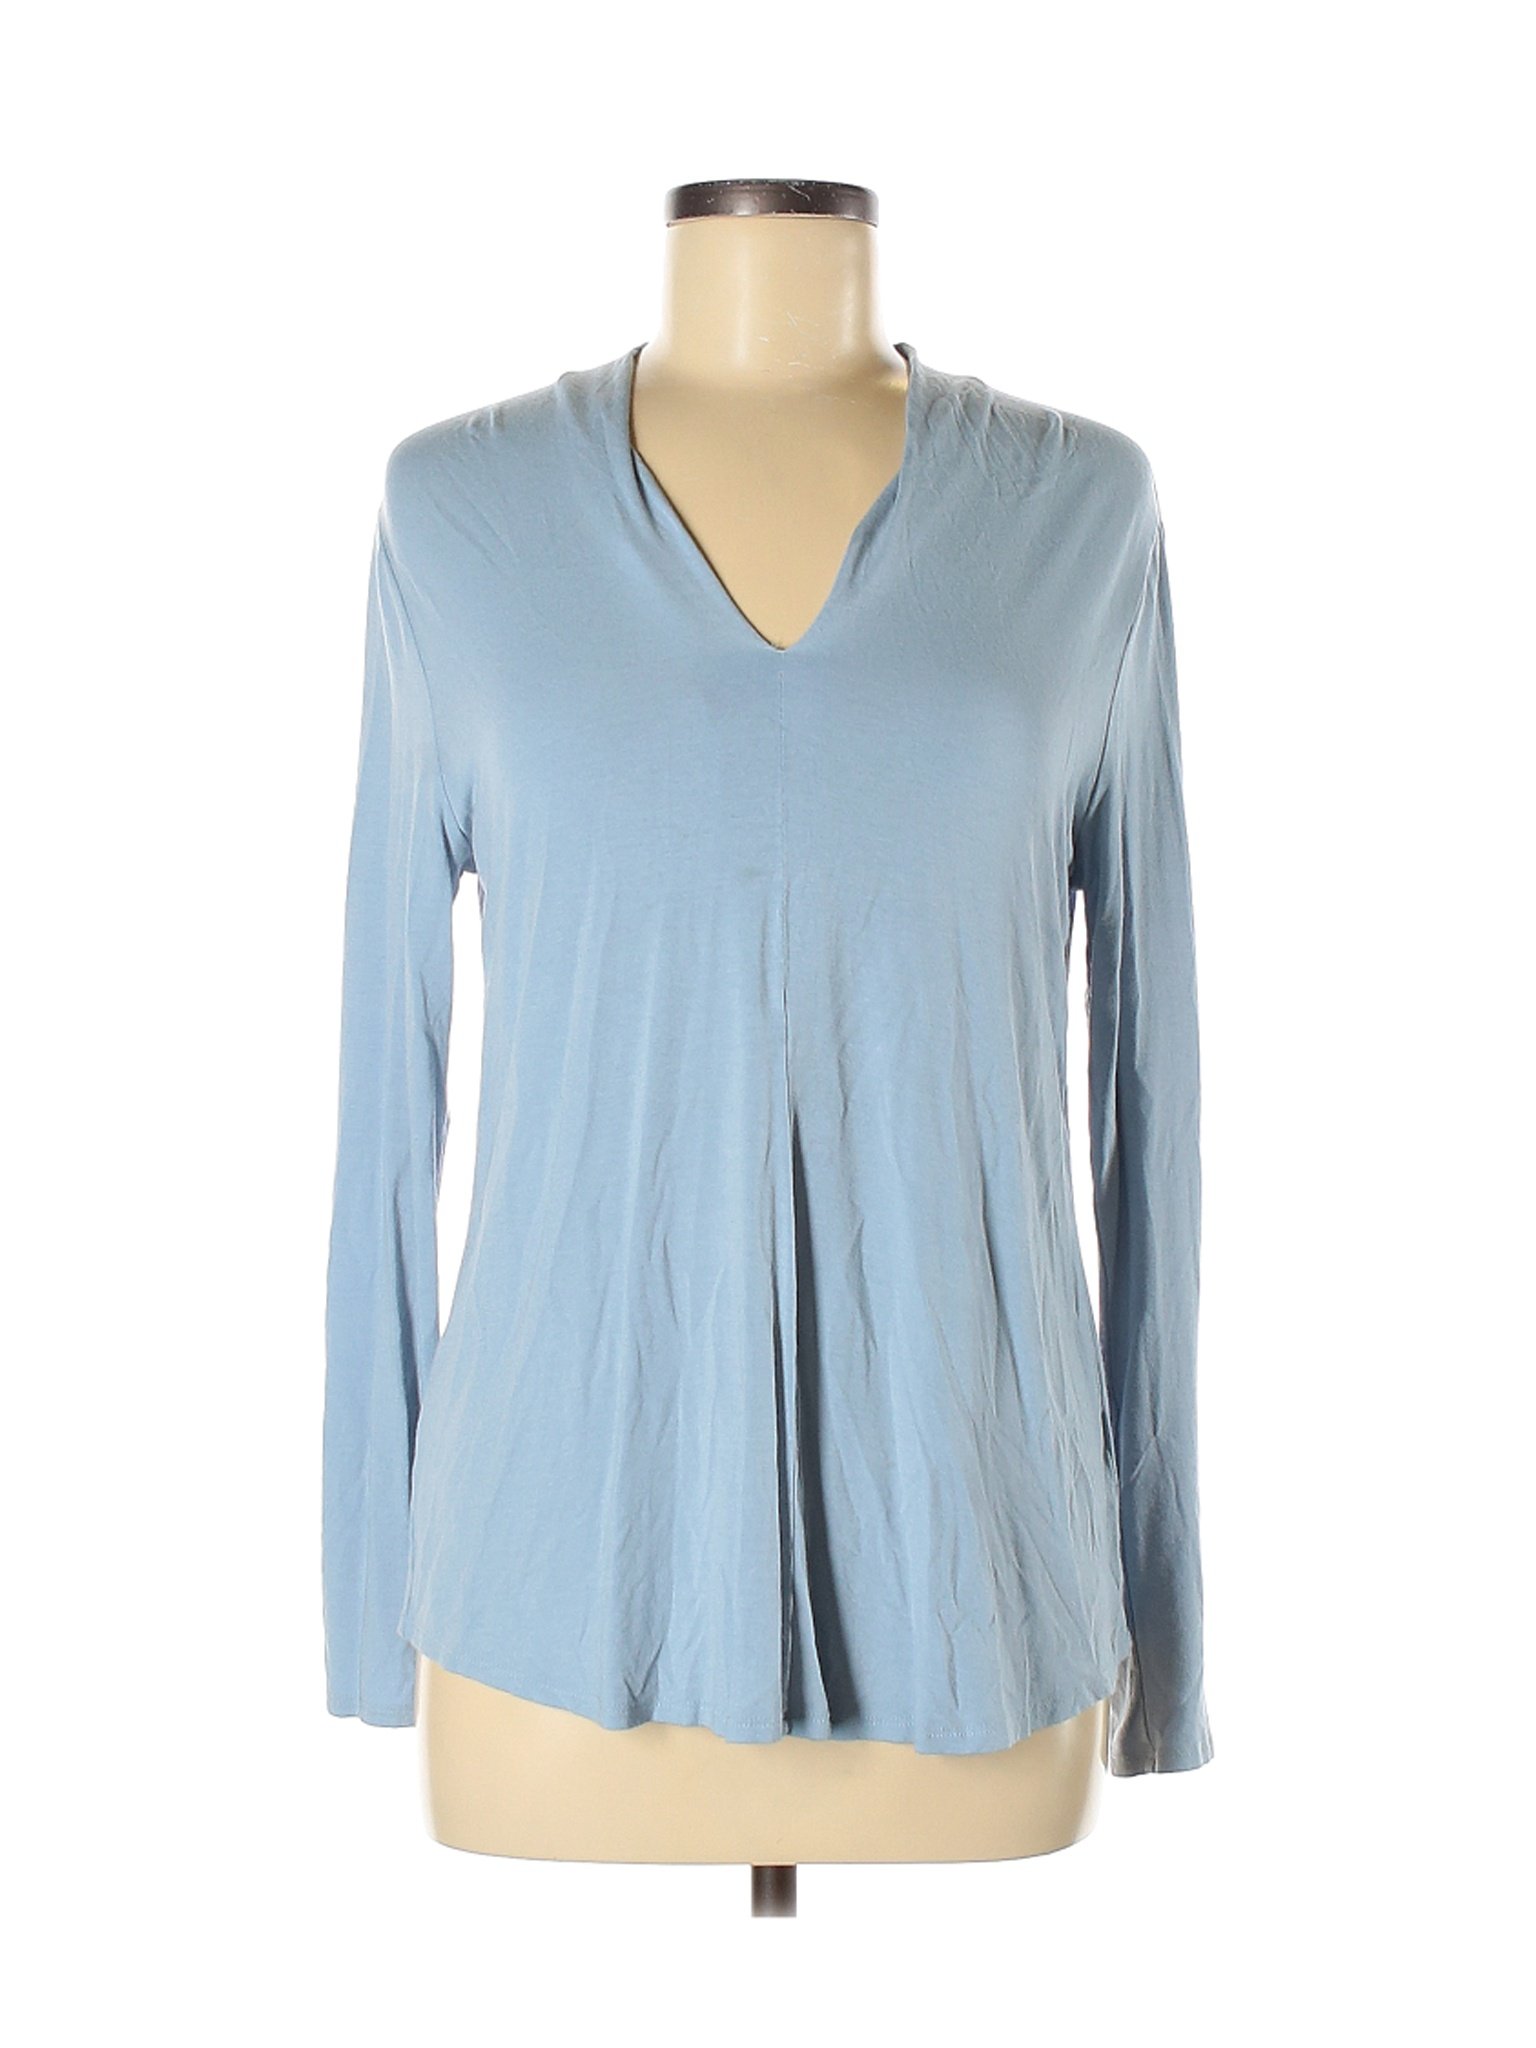 PREMISE Women Blue Long Sleeve Top M | eBay